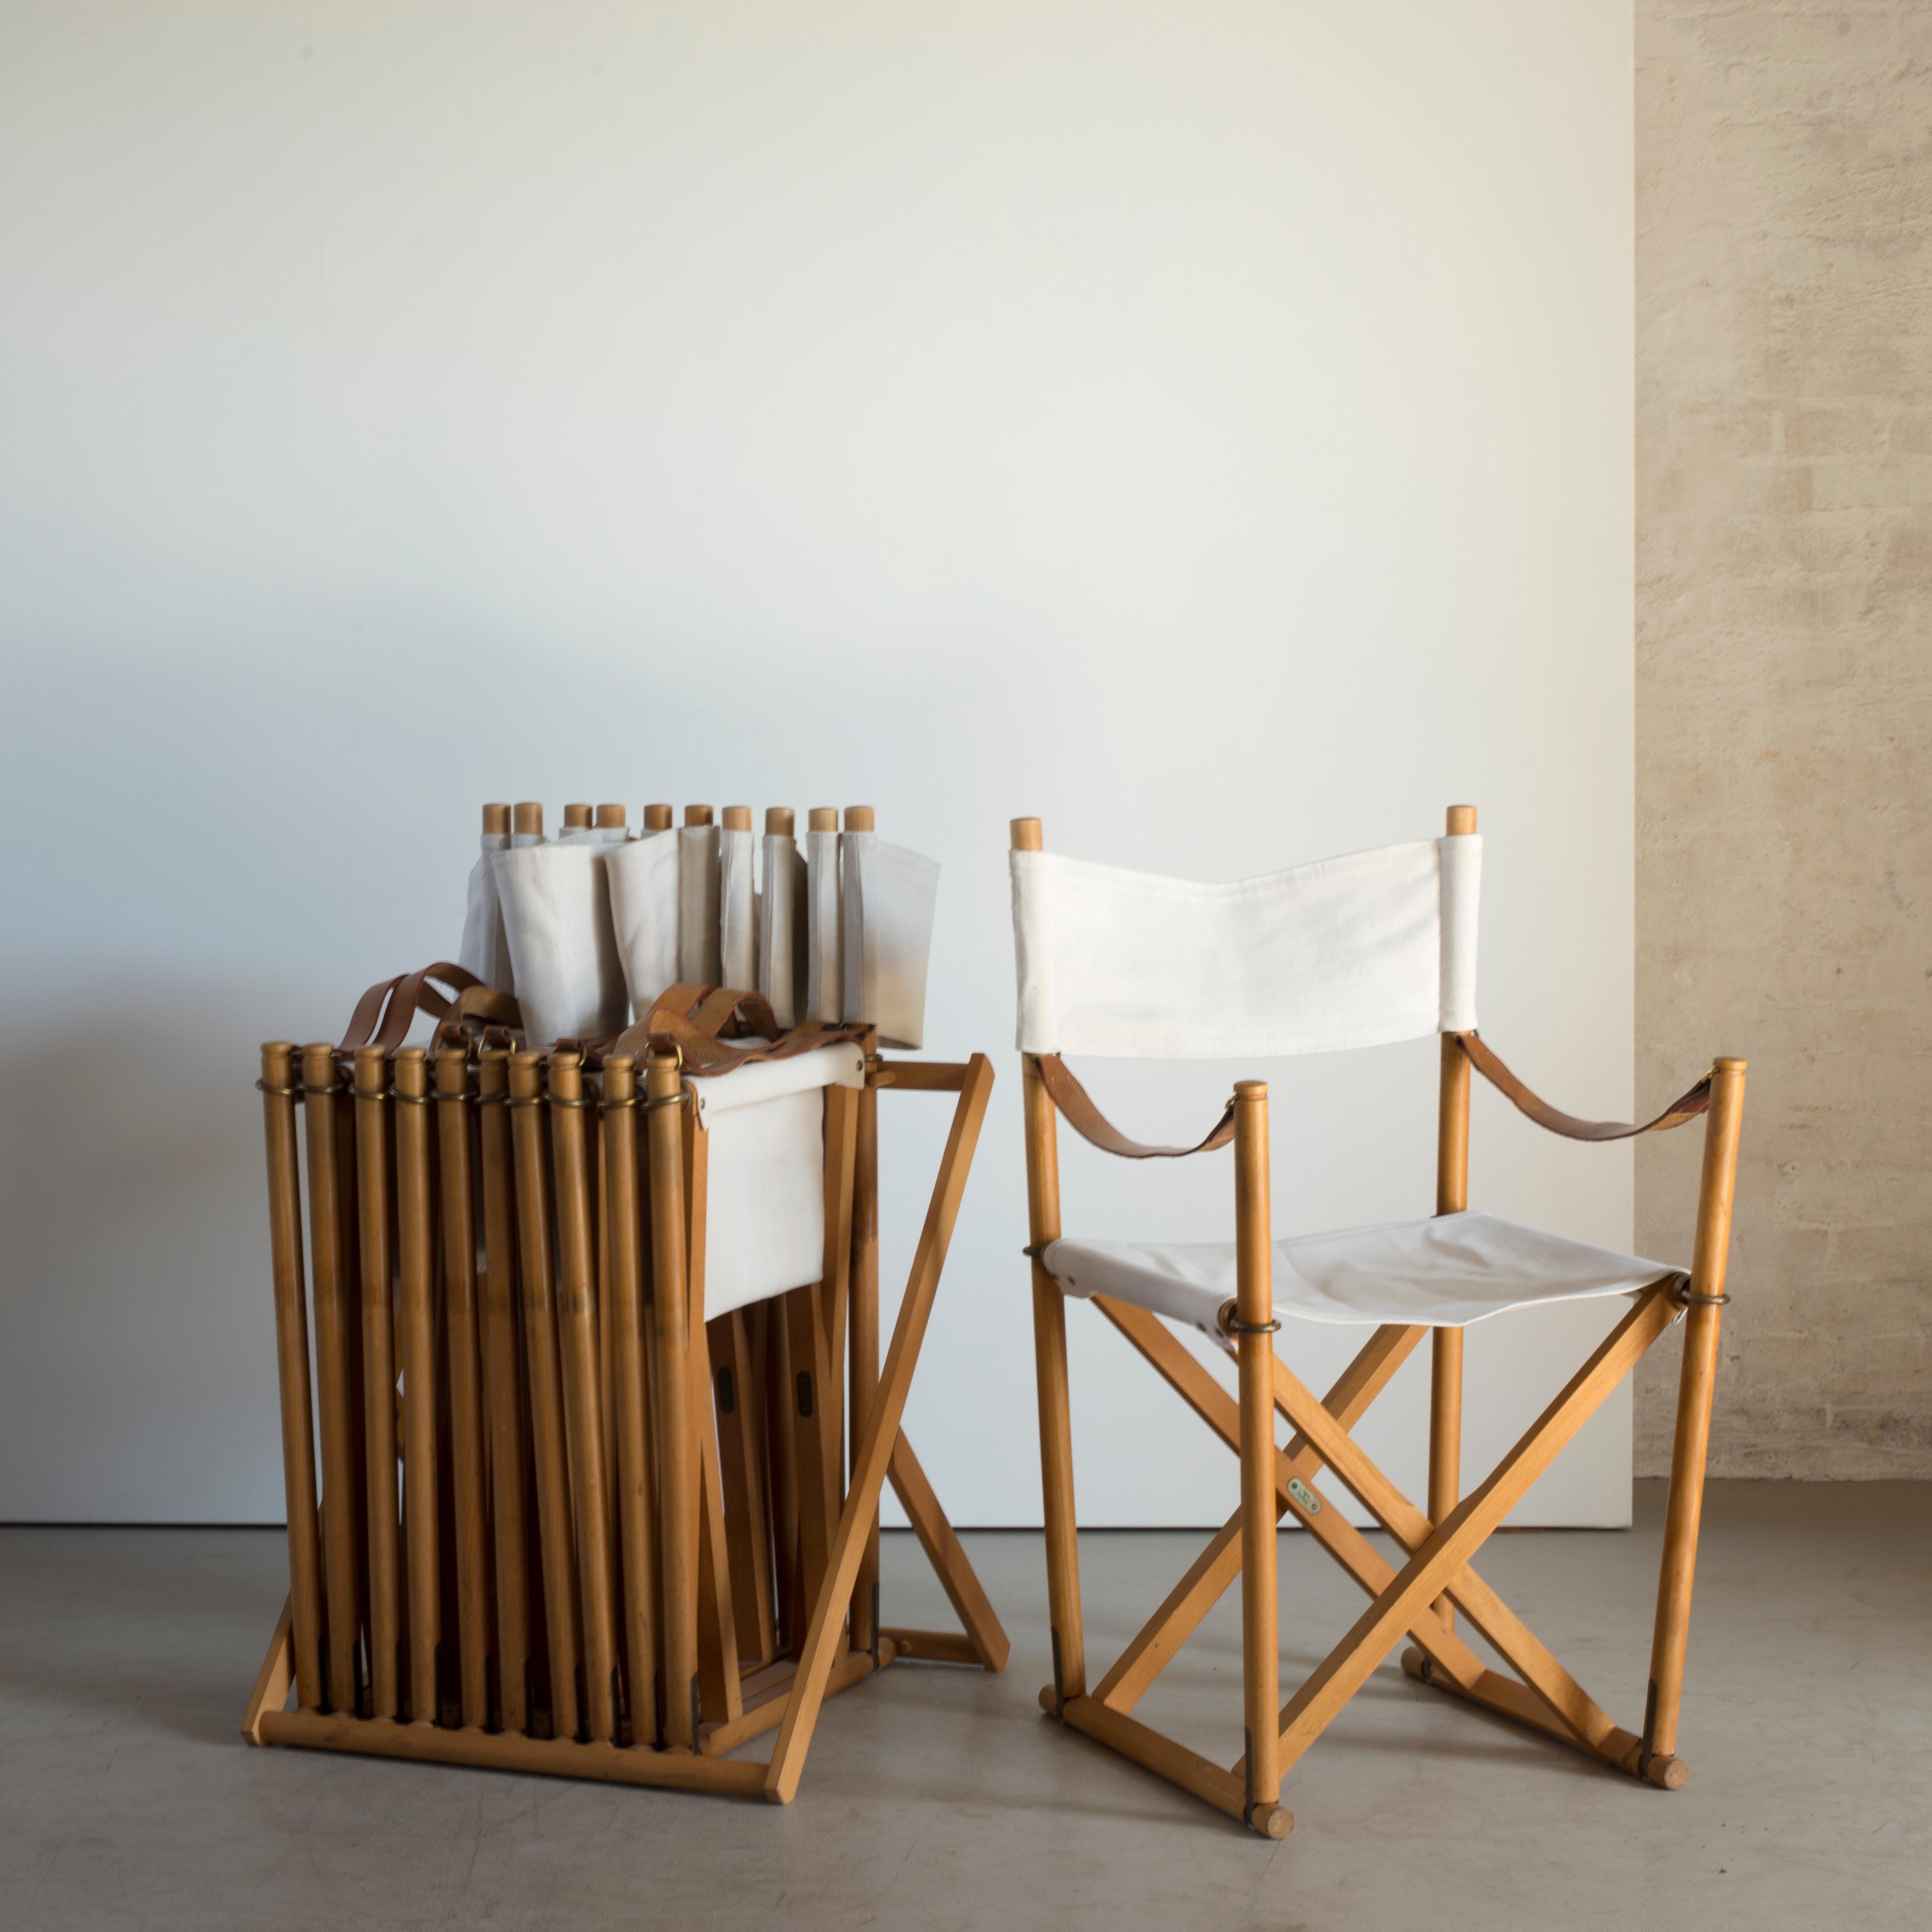 Mogens Koch set of six folding chairs. Executed by Rud. Rasmussen, Copenhagen, Denmark.